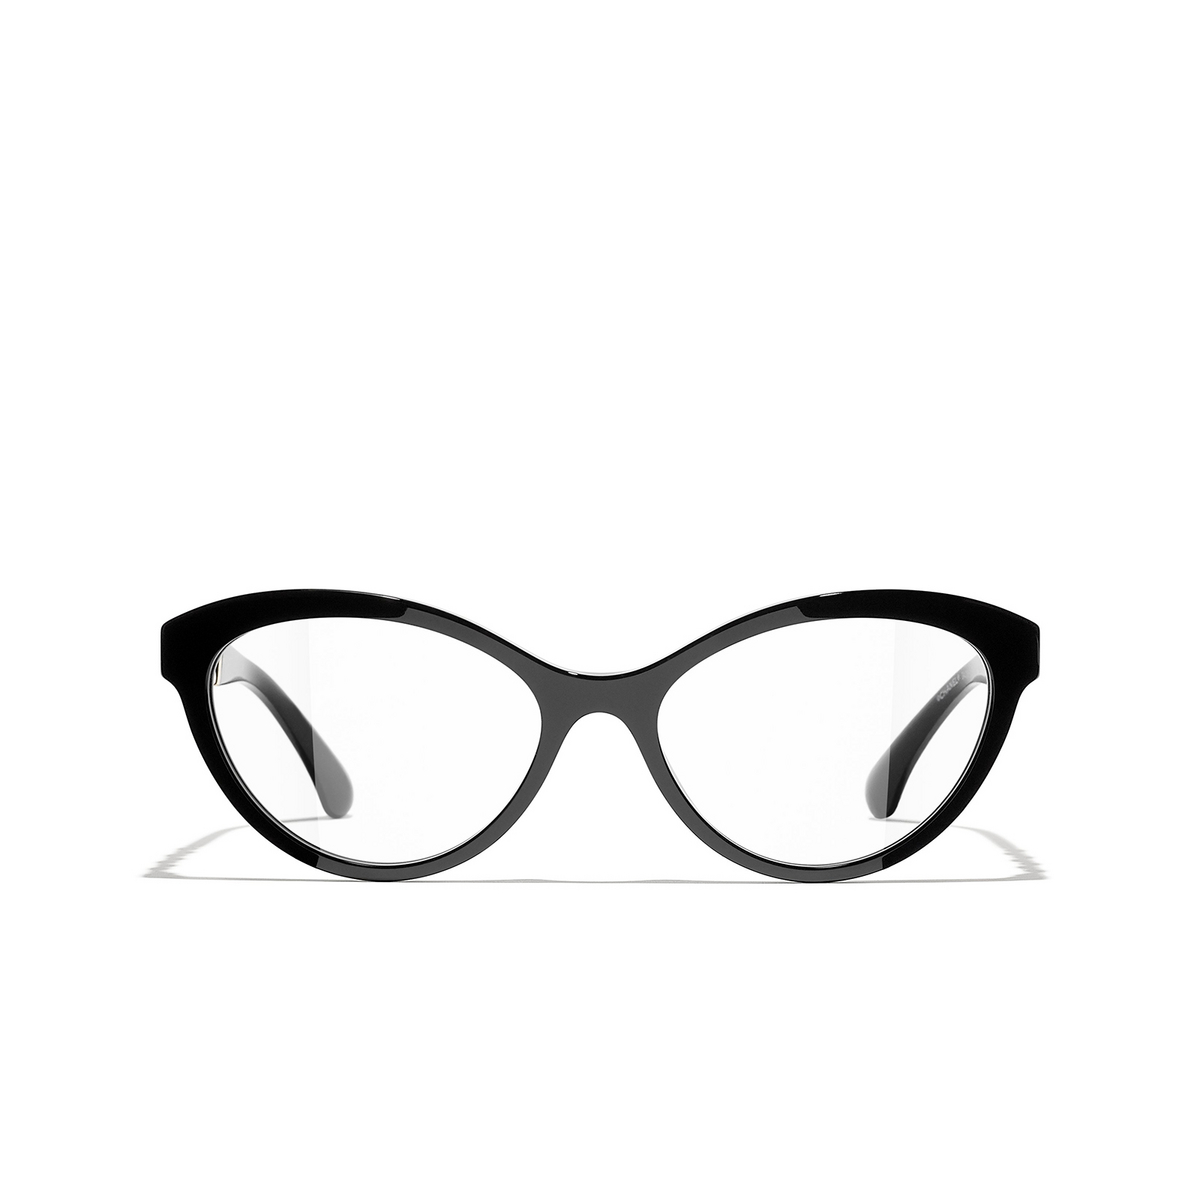 CHANEL cateye Eyeglasses C622 Black & Gold - front view